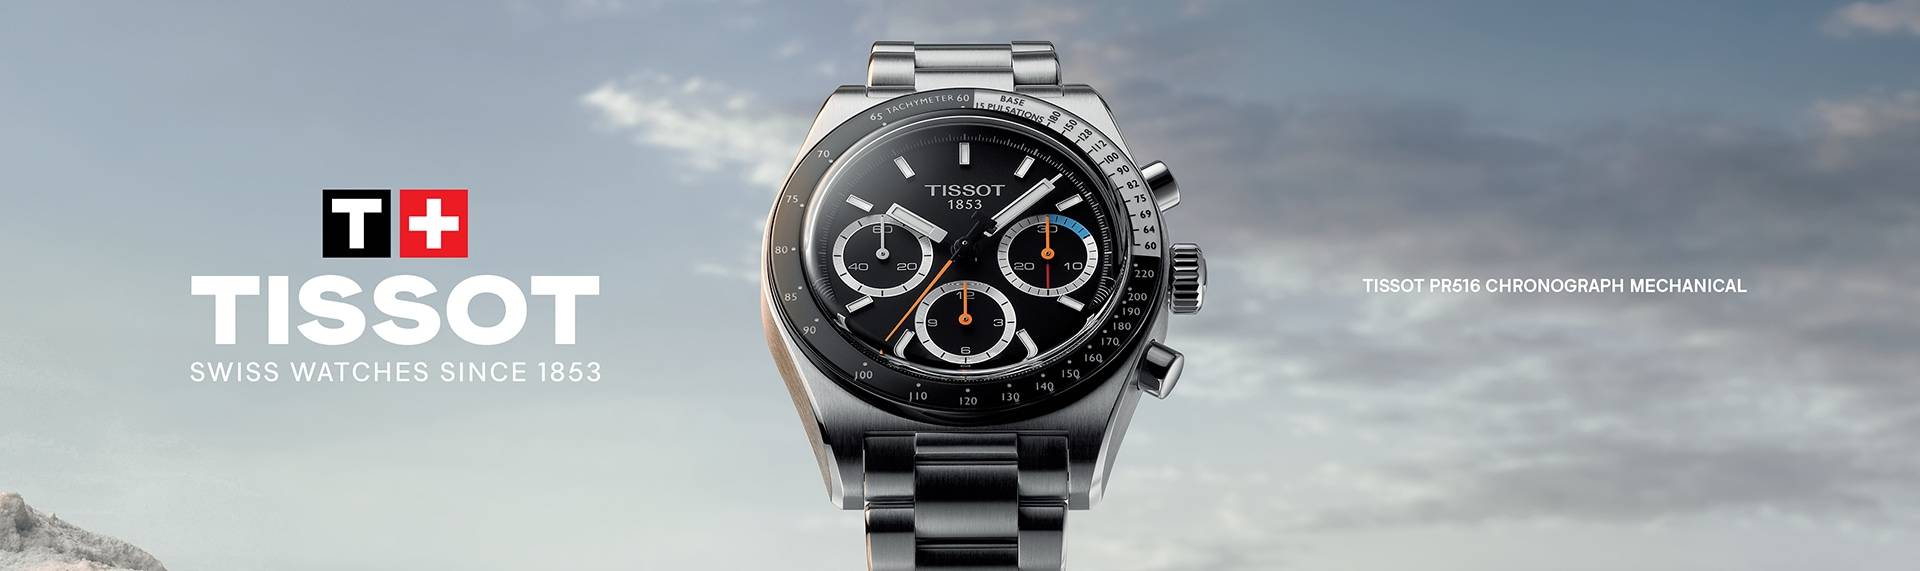 Tissot watch banner PR516 chronograph mechanical